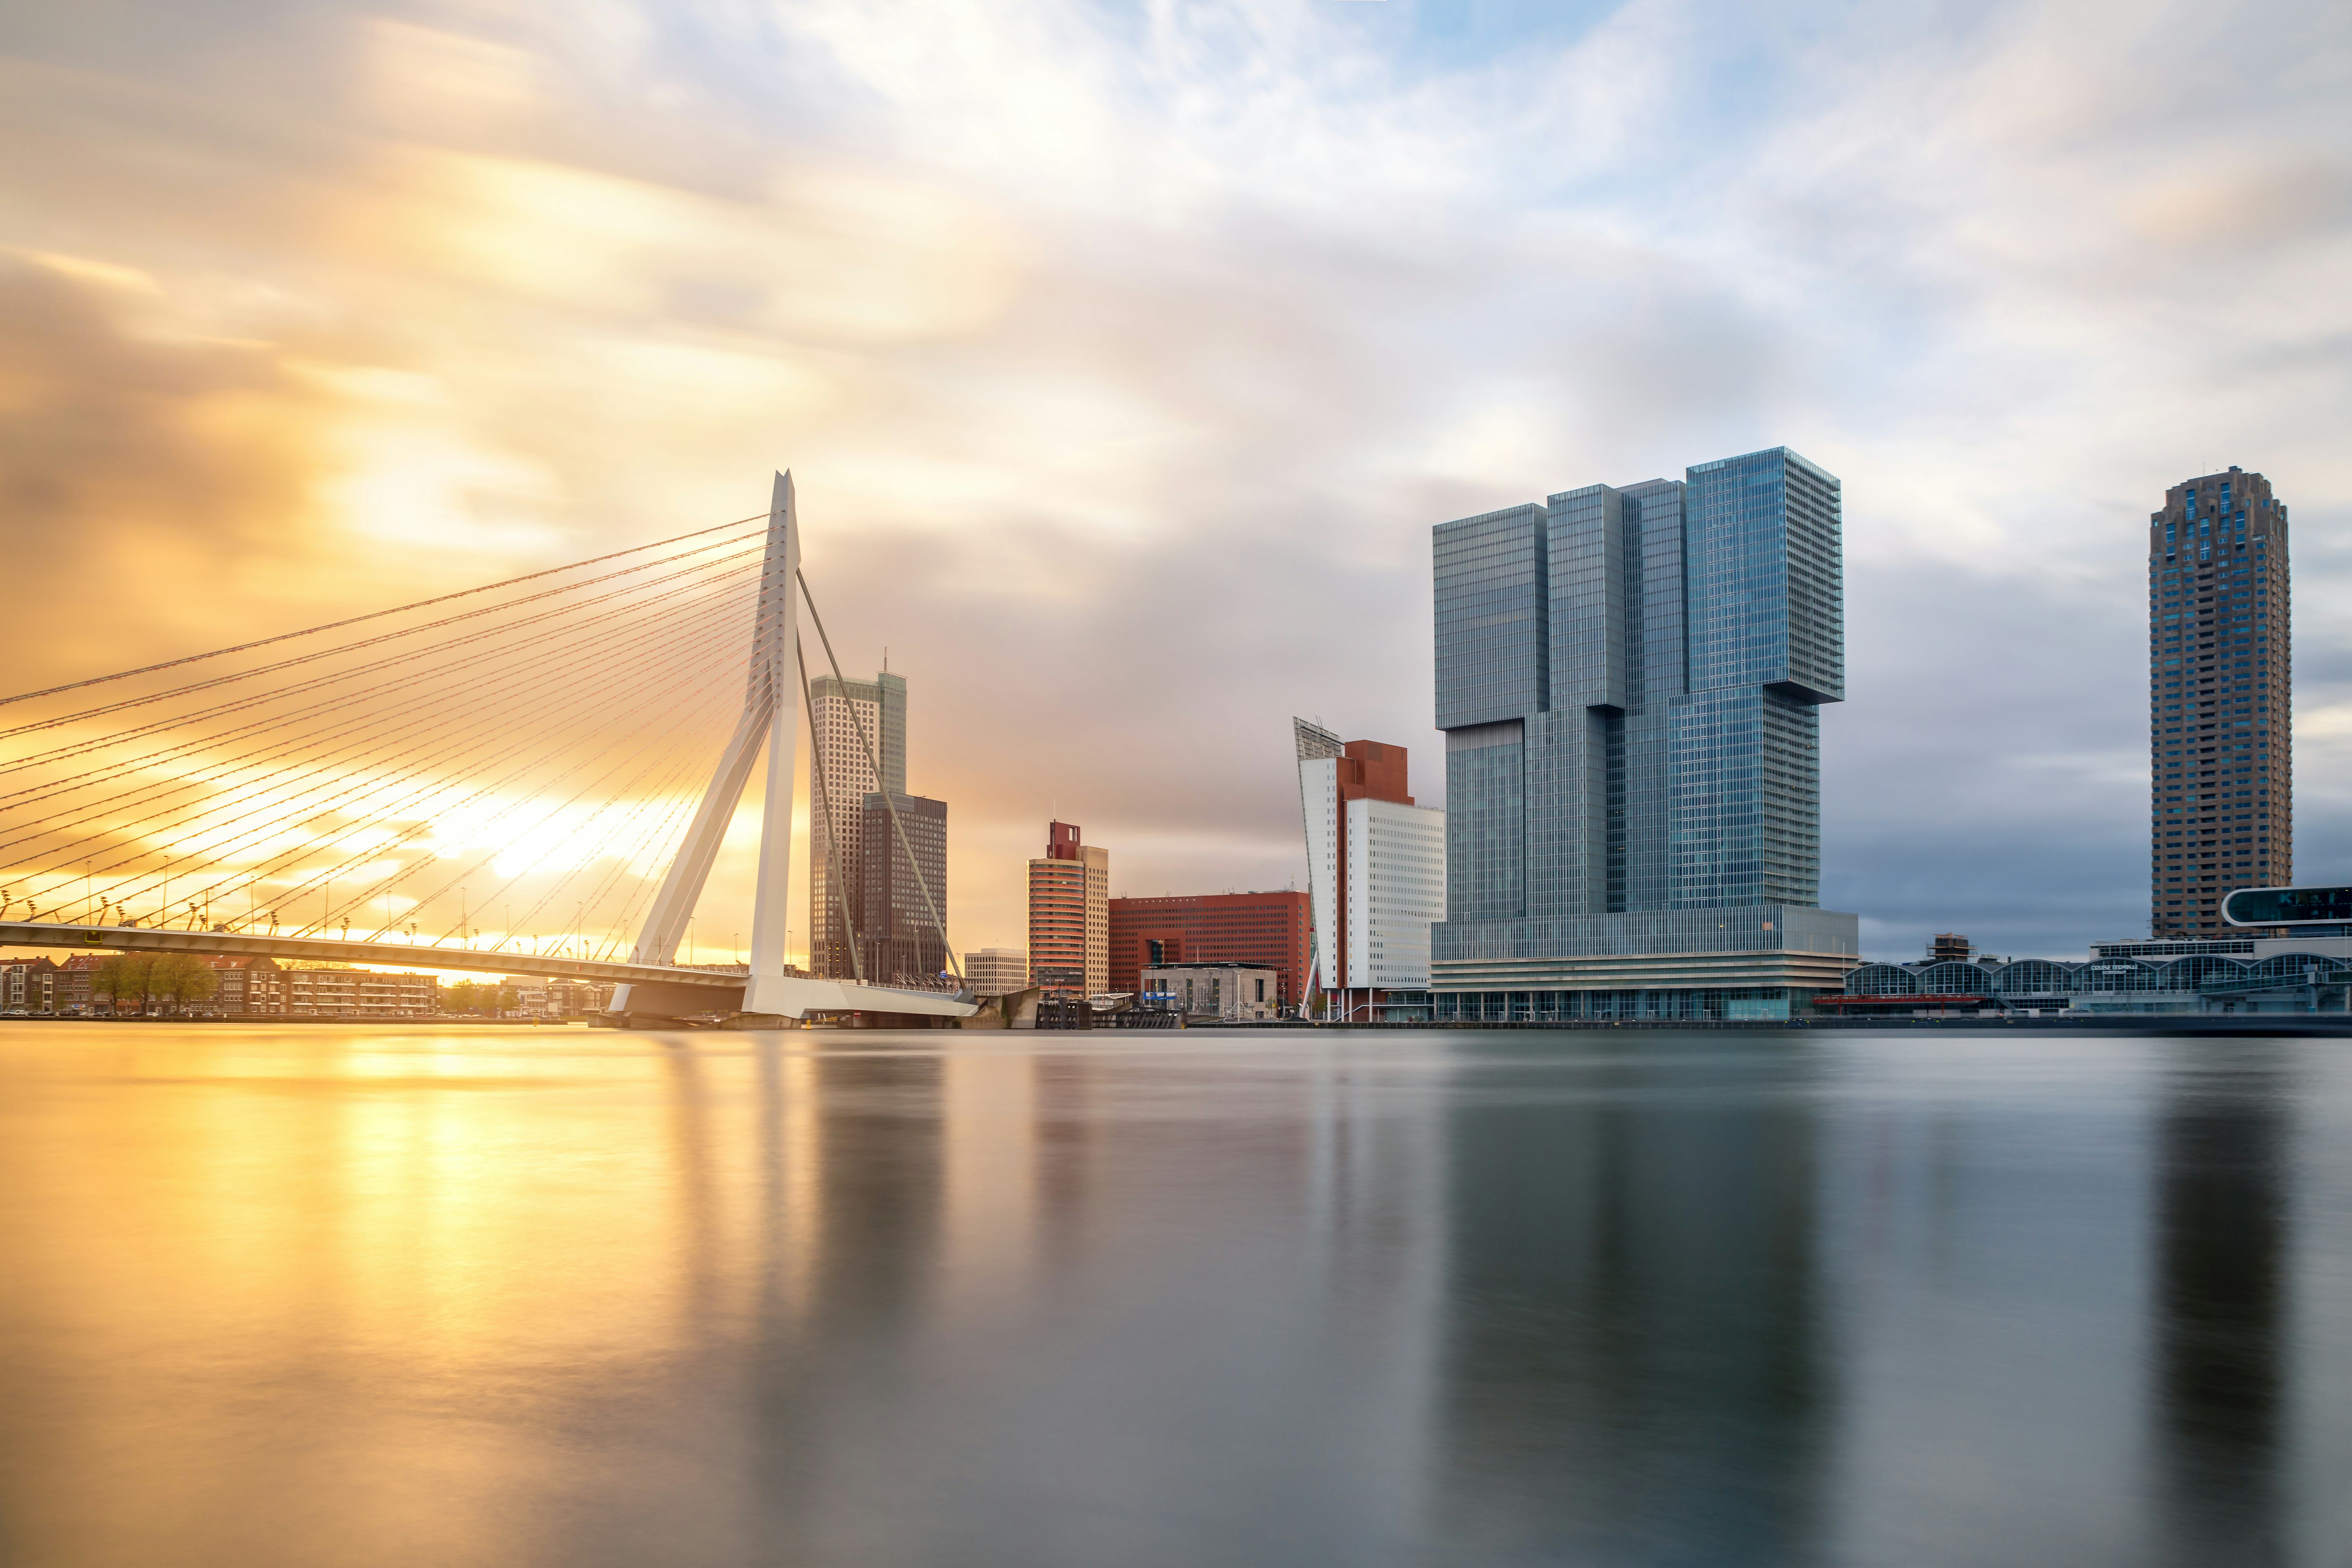 Woningnood: 'Nederland heeft nog een Rotterdam nodig'